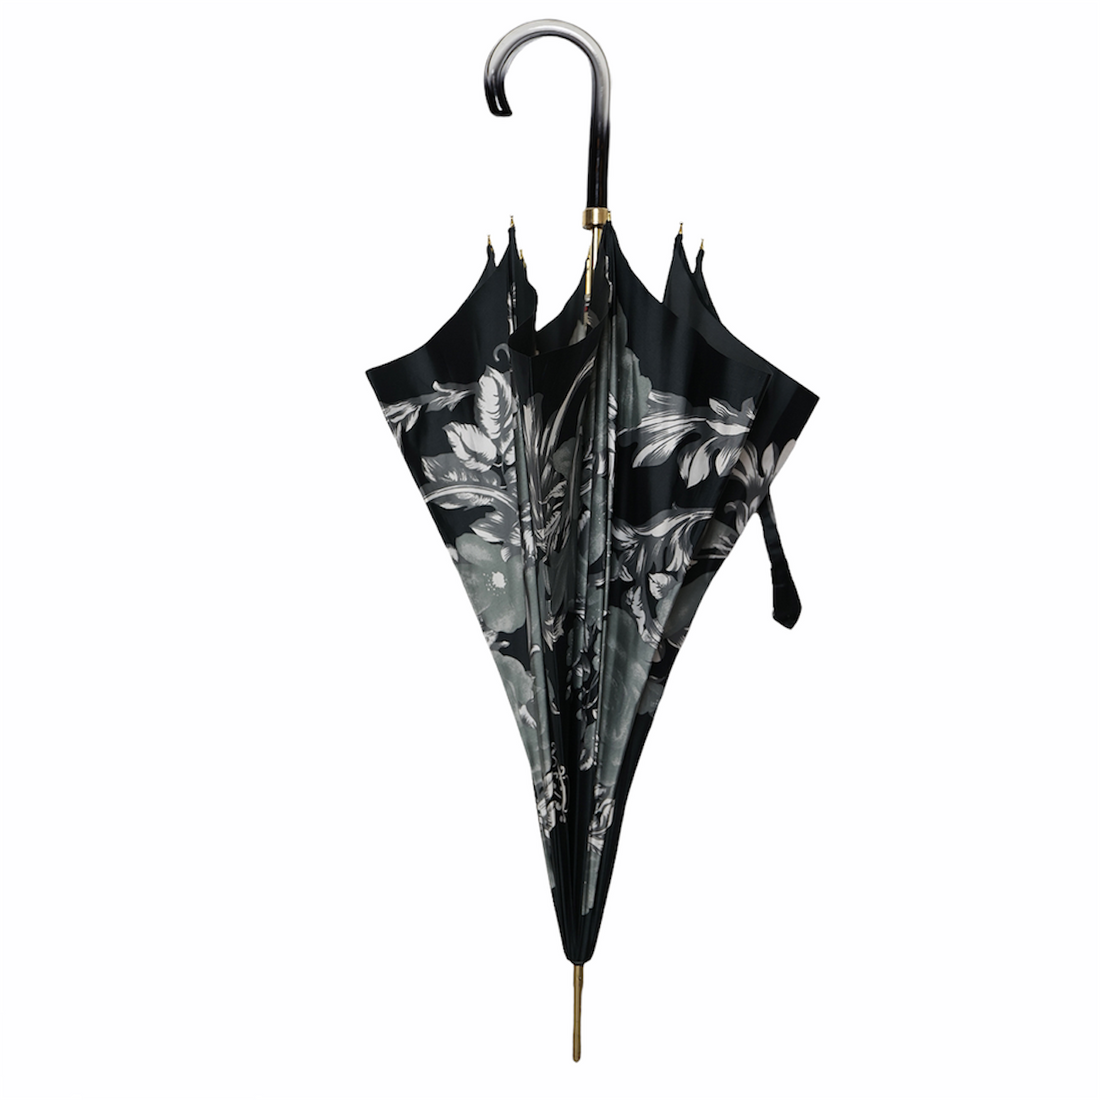 Christian Dior umbrella